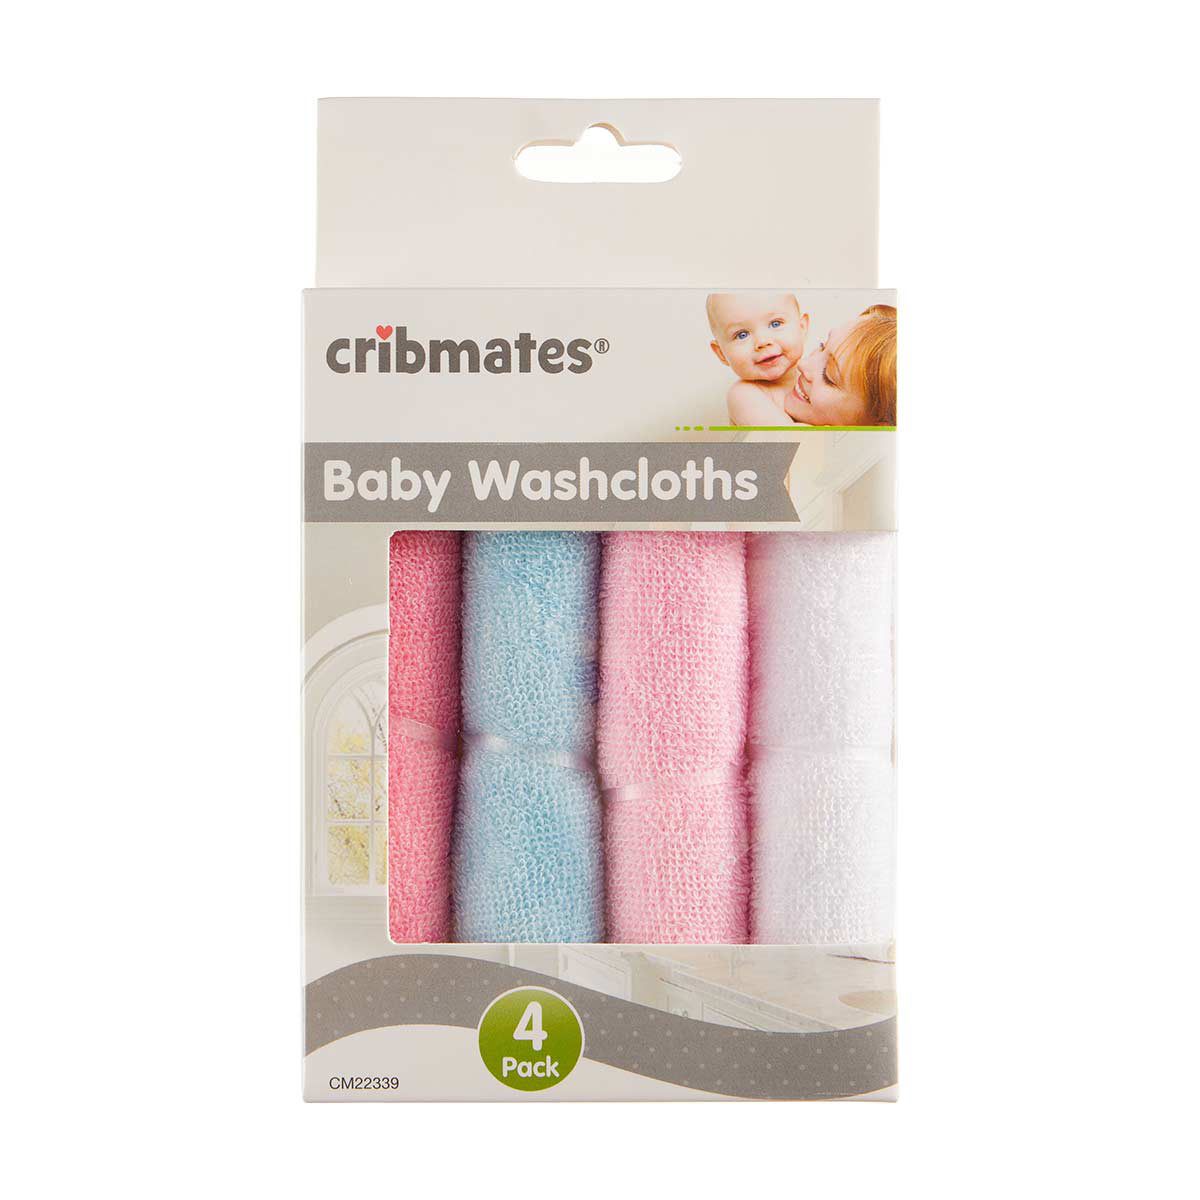 Cribmates Baby Washcloths, Assorted